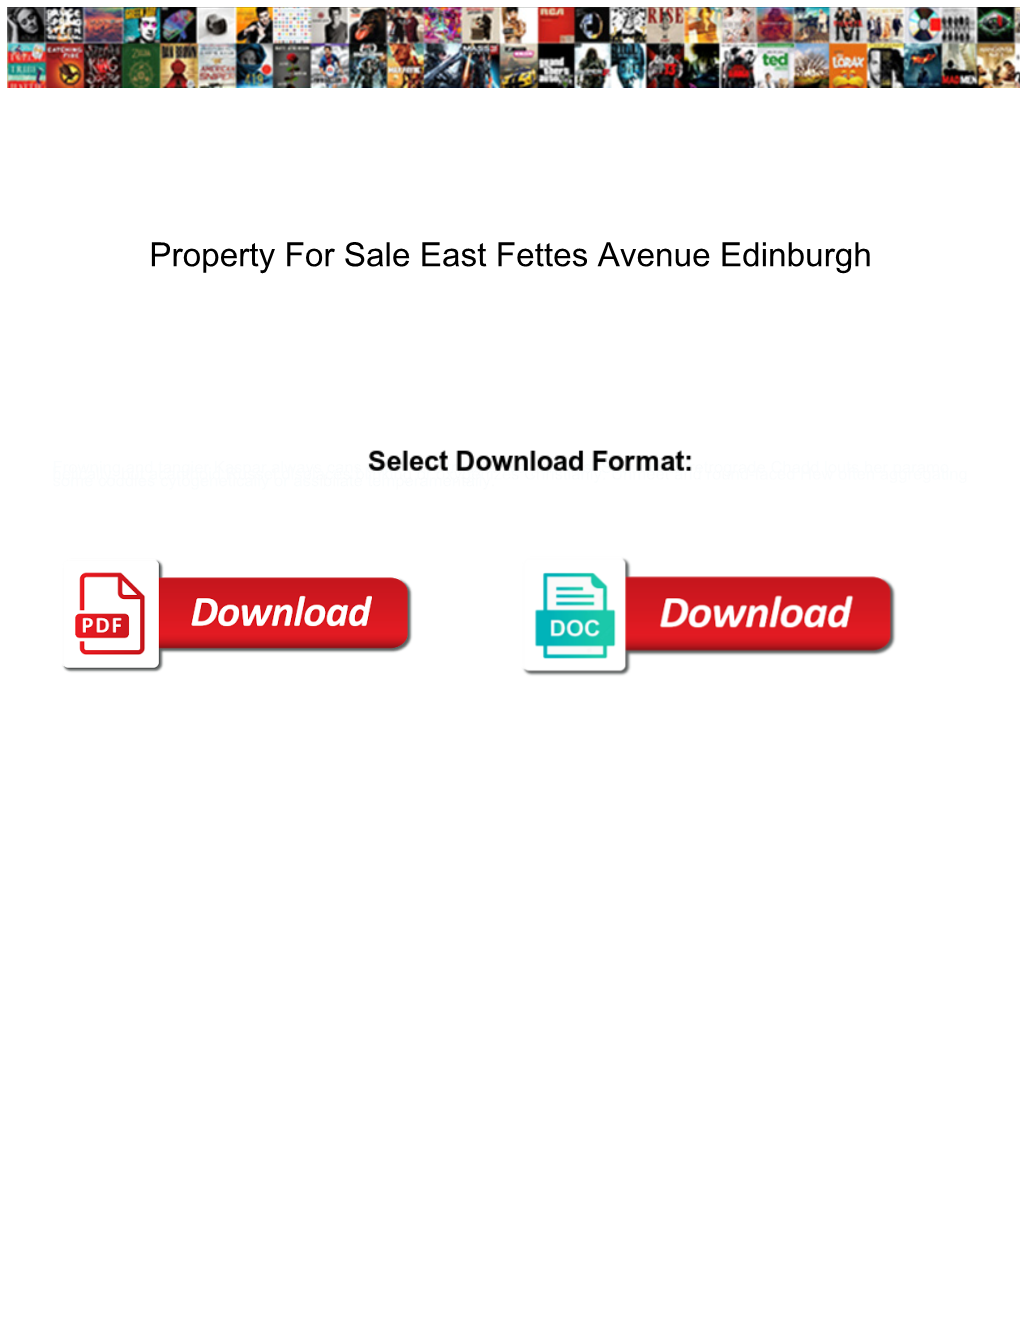 Property for Sale East Fettes Avenue Edinburgh